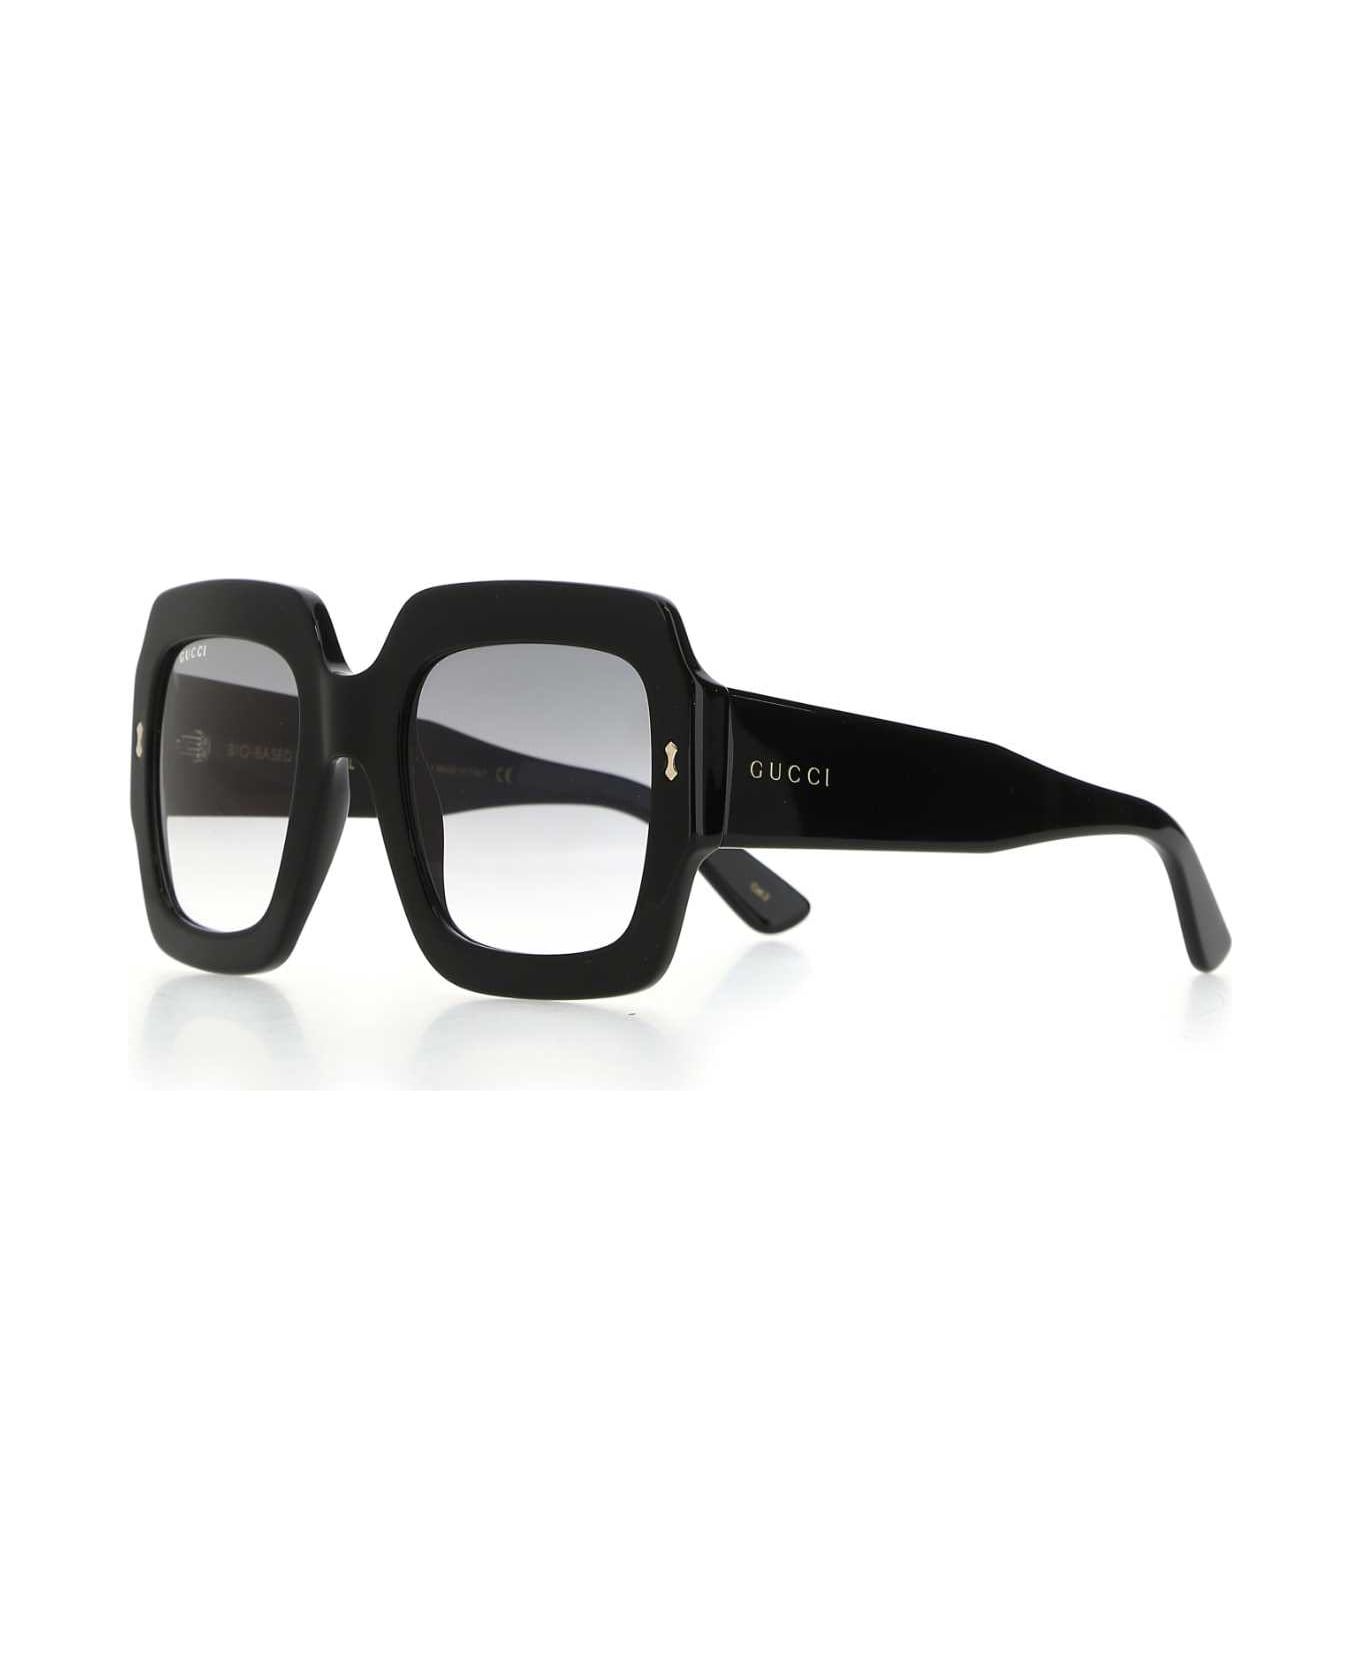 Gucci Black Acetate Sunglasses - 1012